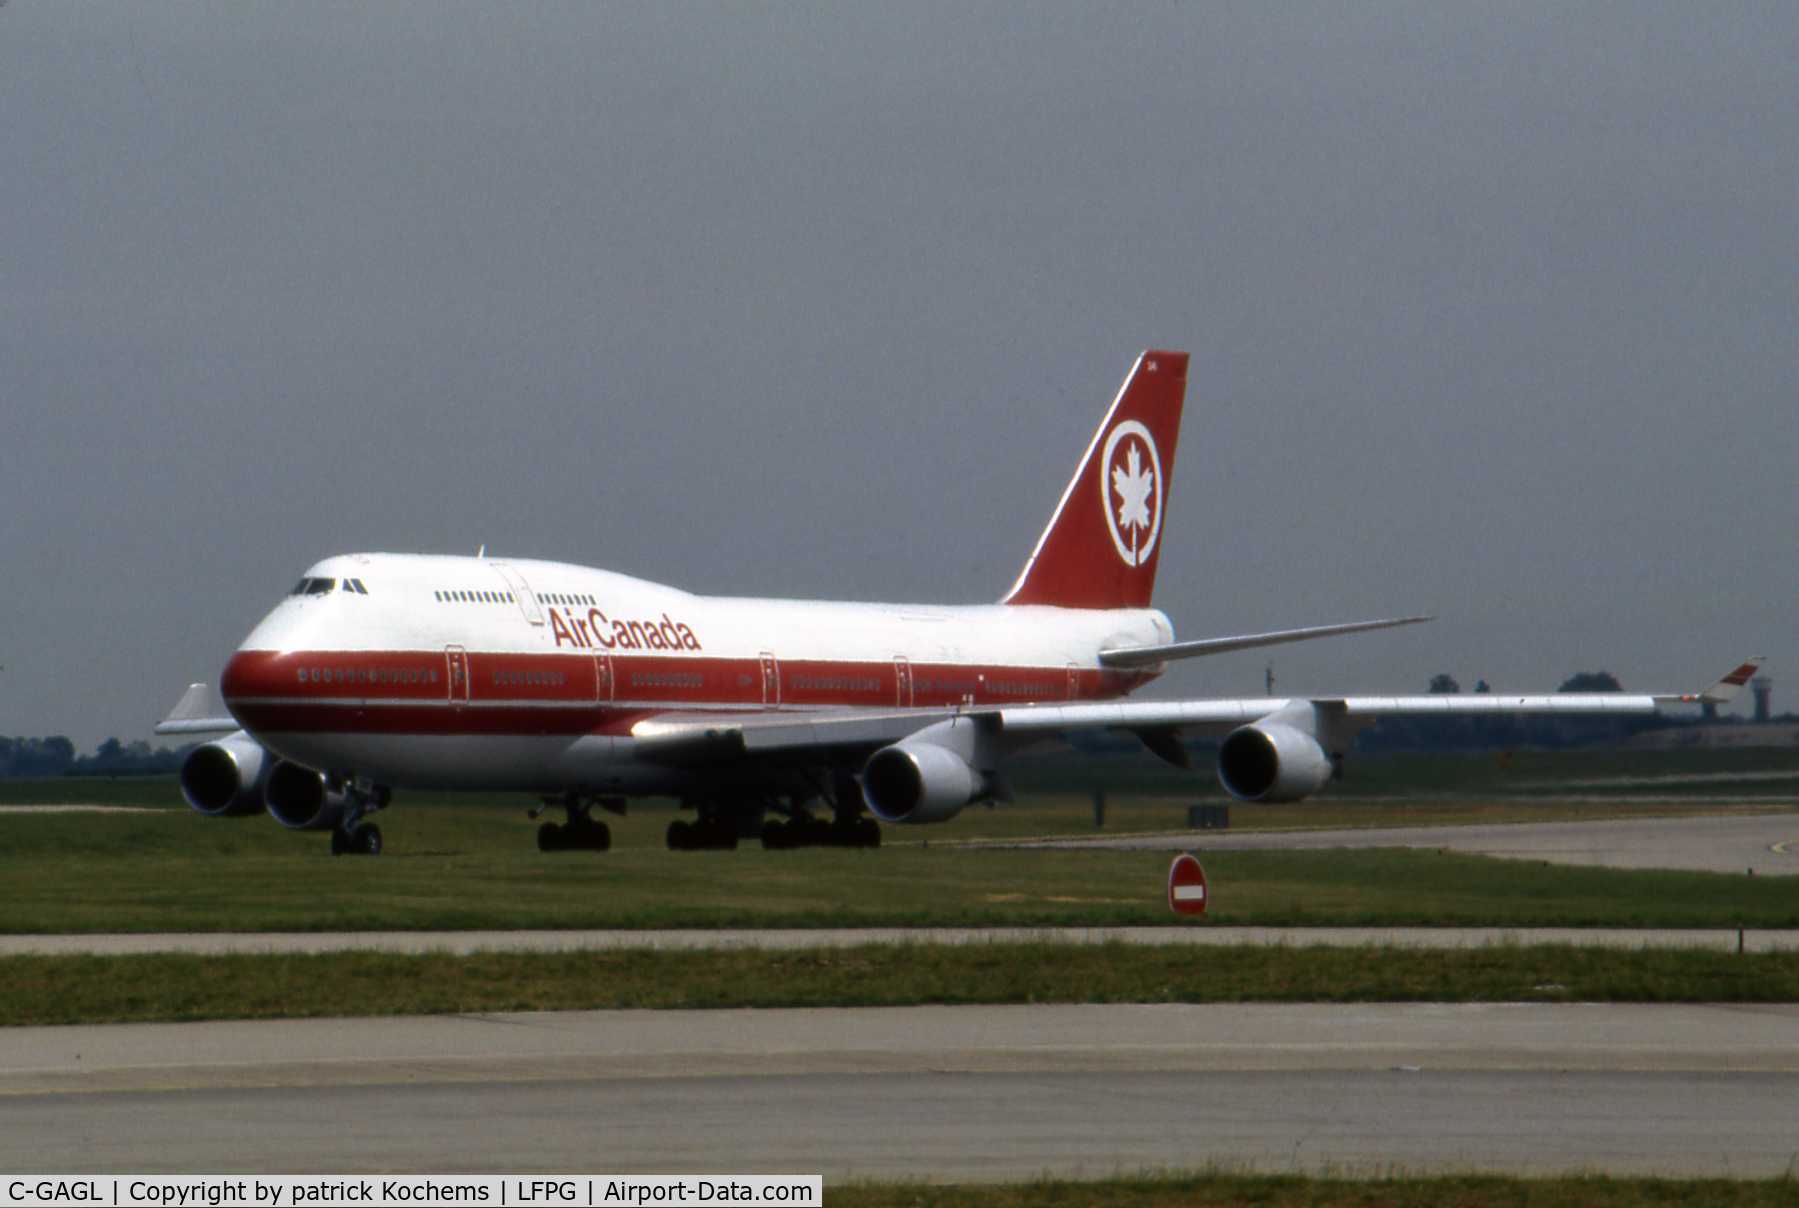 C-GAGL, 1991 Boeing 747-433F C/N 24998, Air Canada arrived at Charles de Gaulle